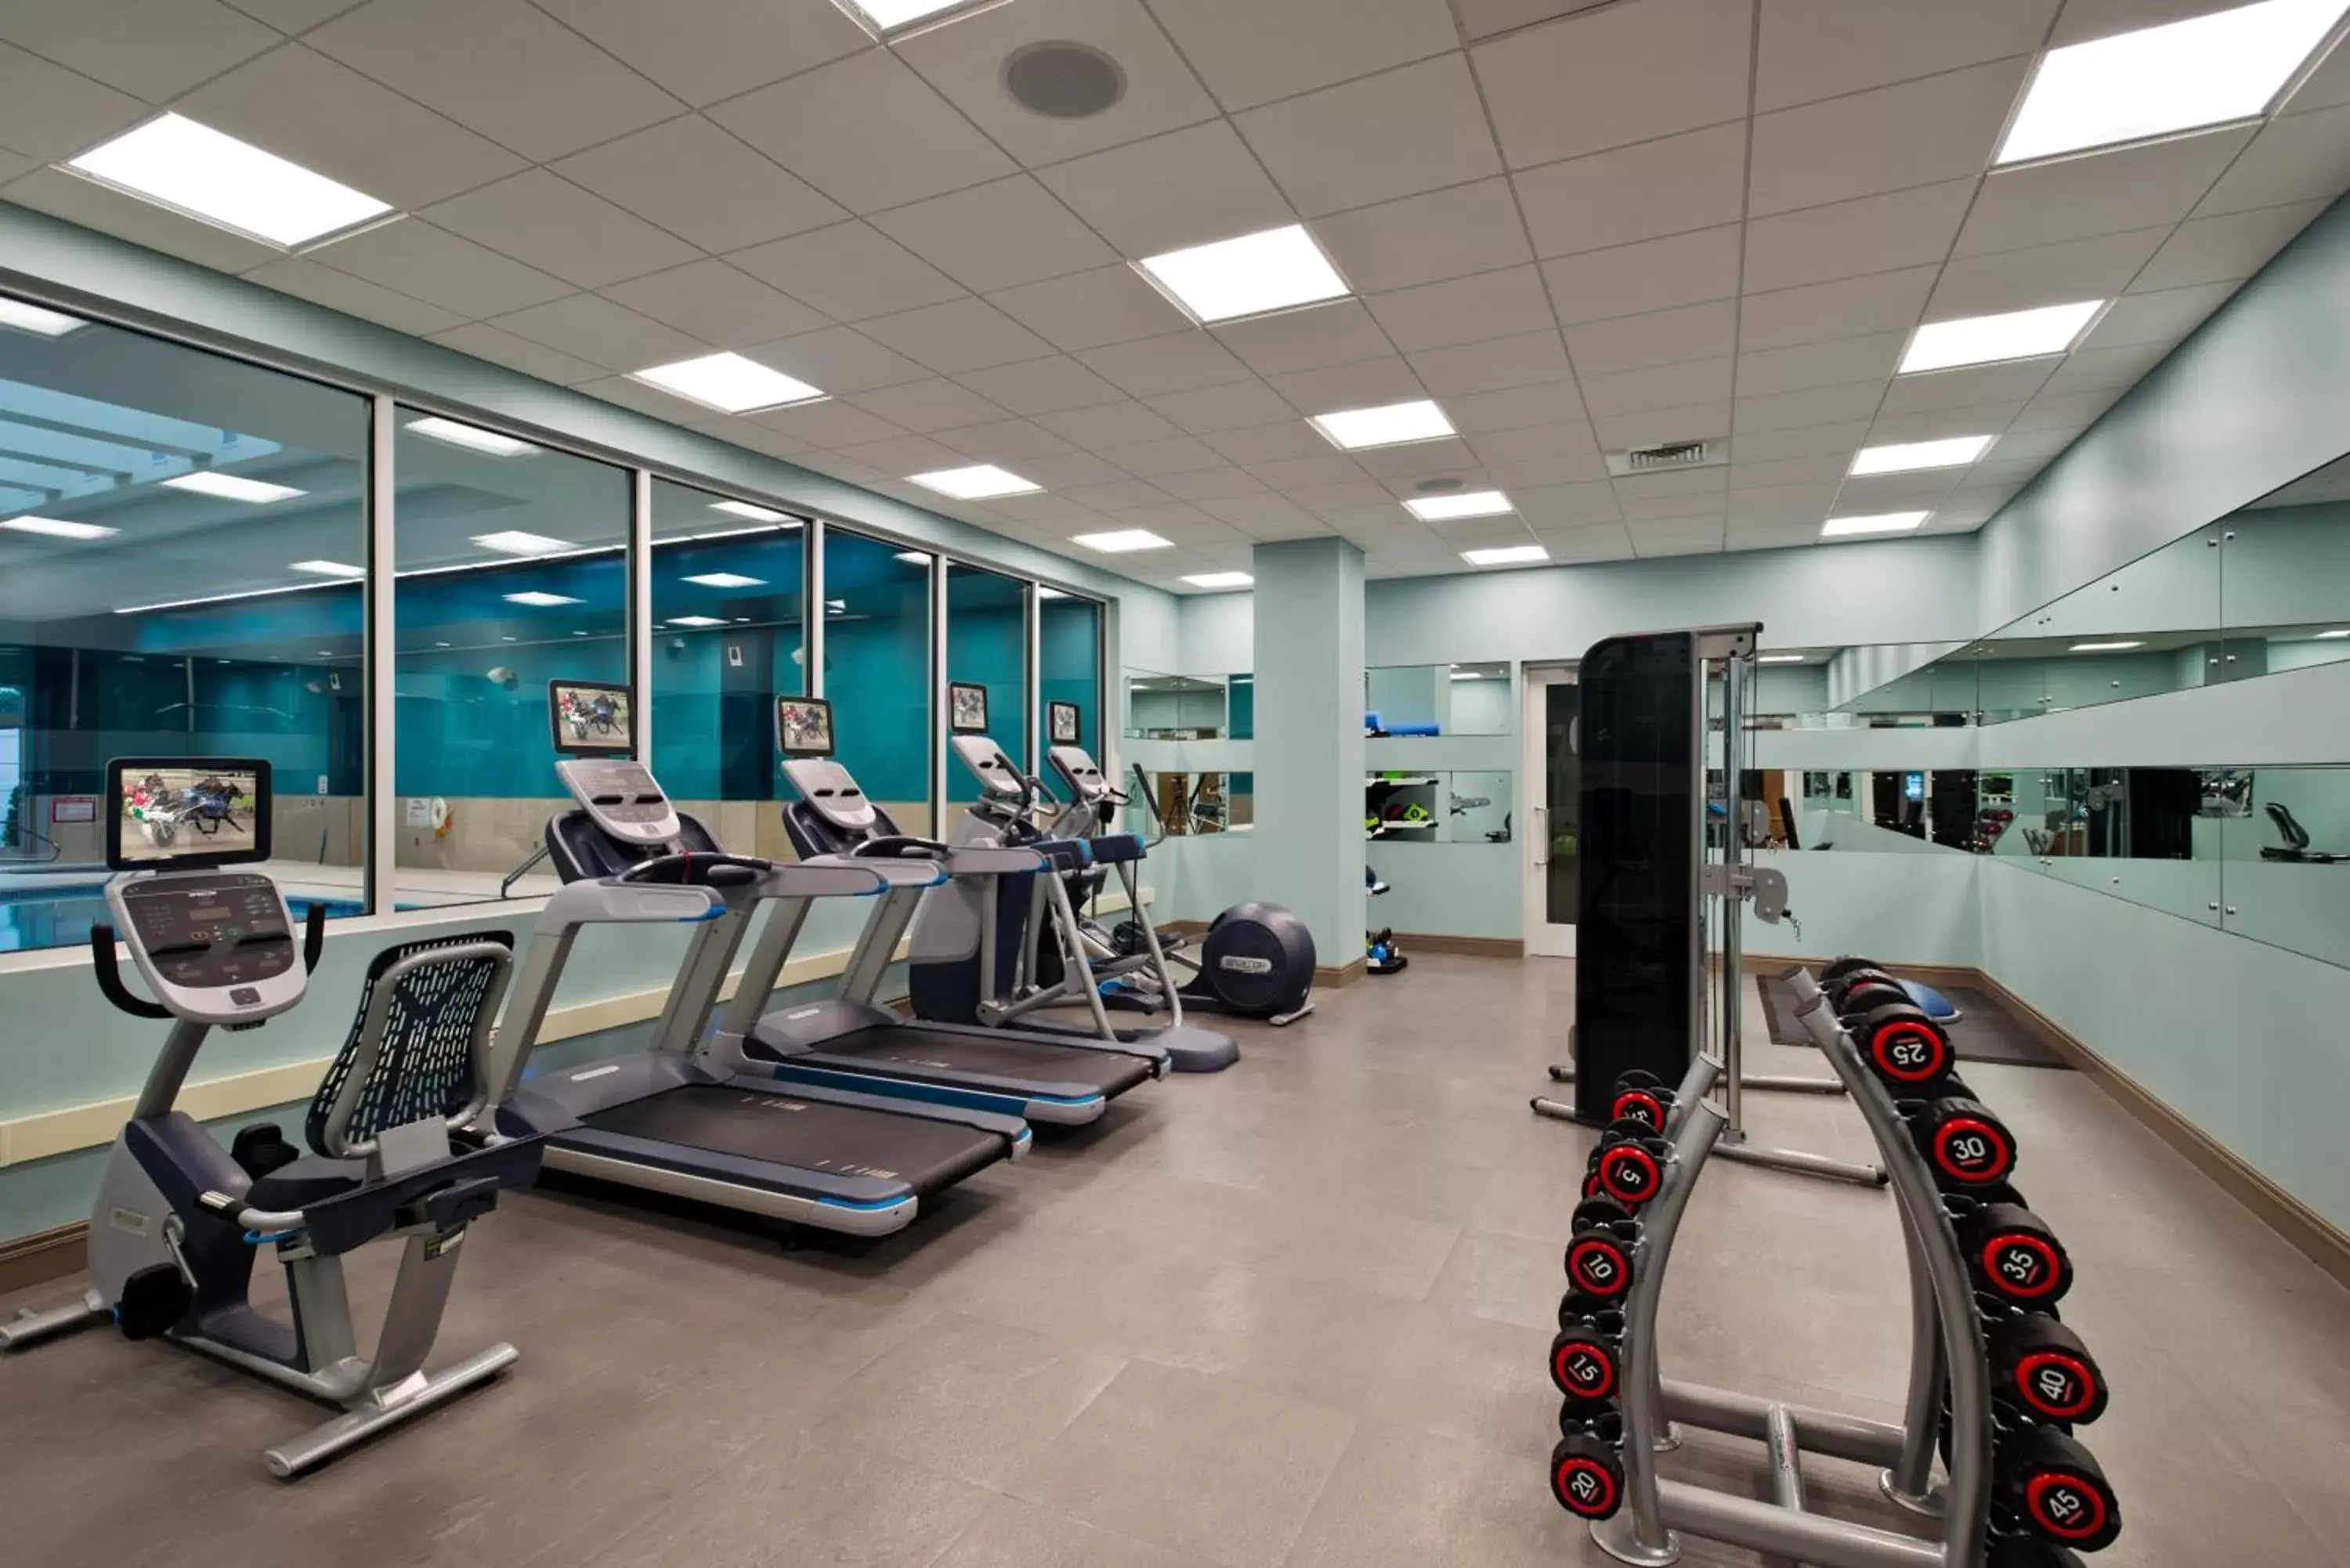 Fitness centre/facilities, Fitness Center/Facilities in Saratoga Casino Hotel